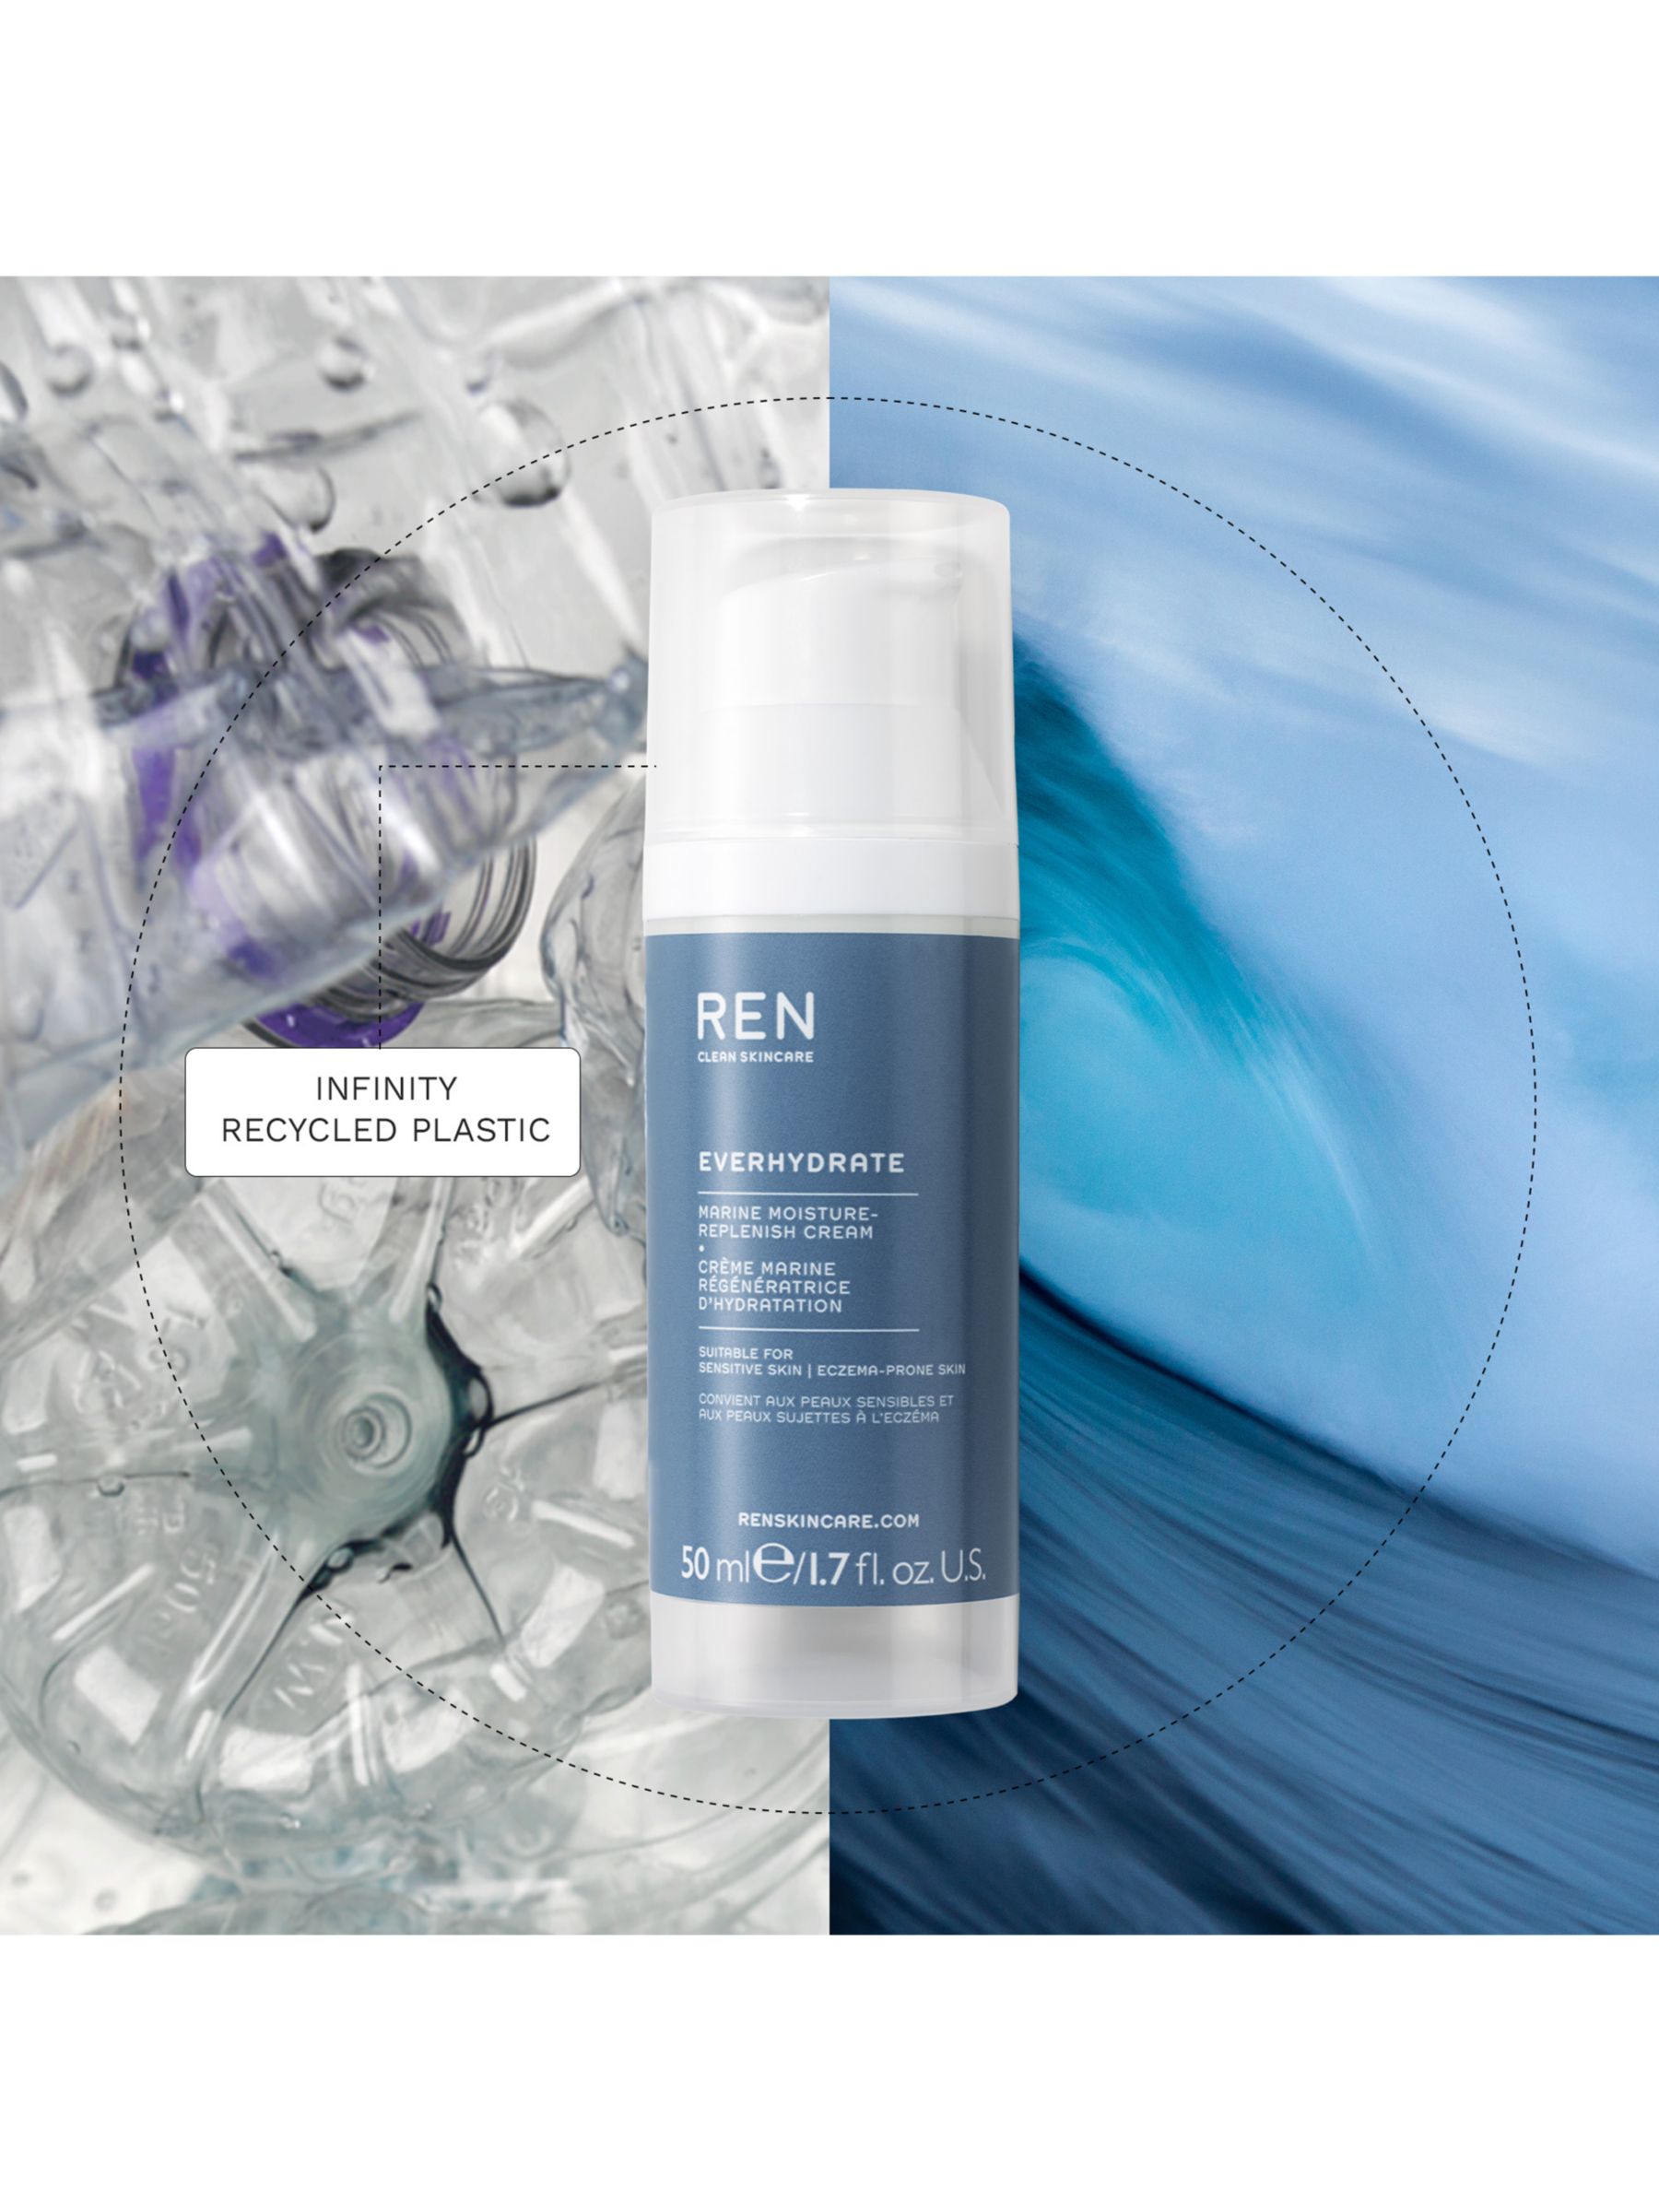 REN Clean Skincare EverHydrate Marine Moisture Replenish Cream, 50ml 5